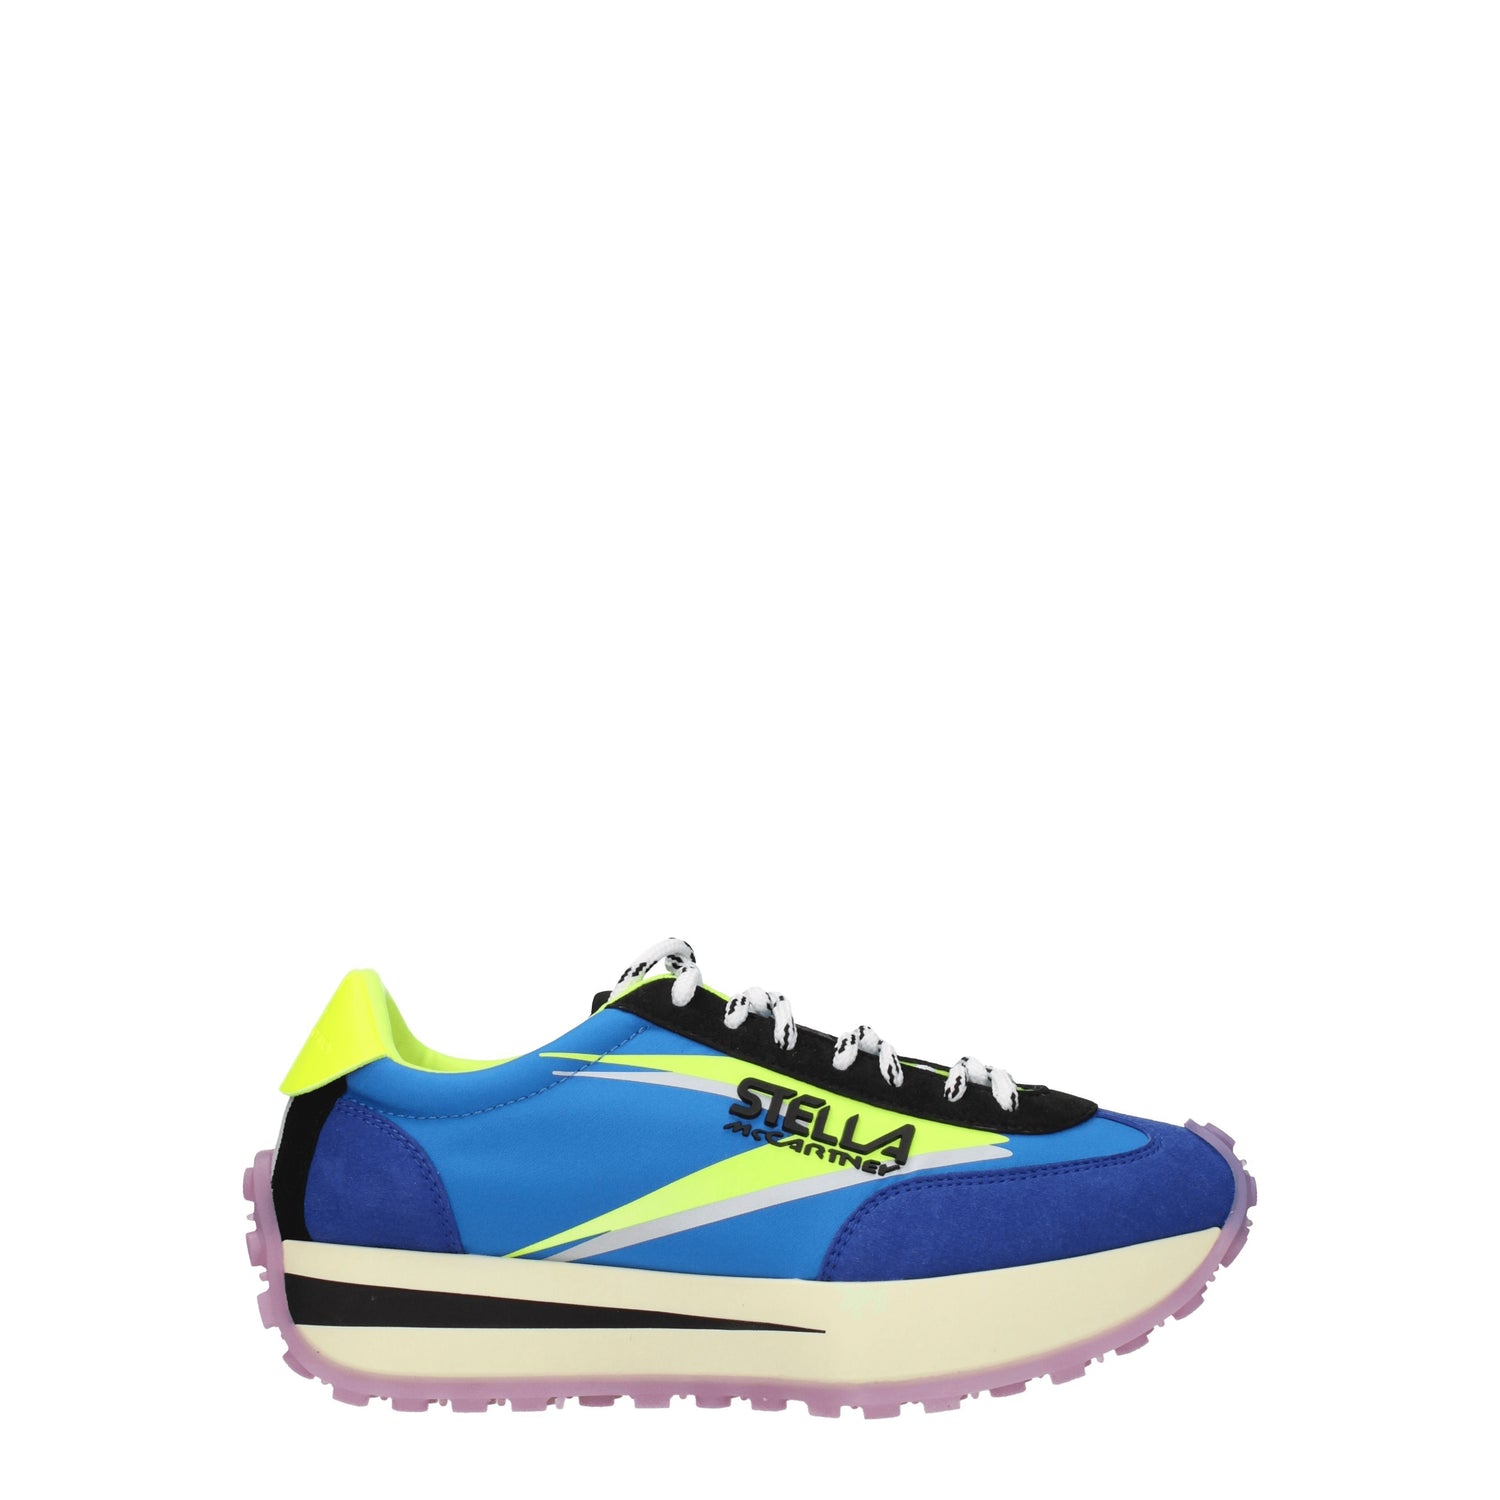 Stella McCartney Sneakers Donna Eco Camoscio Blu Giallo Fluo